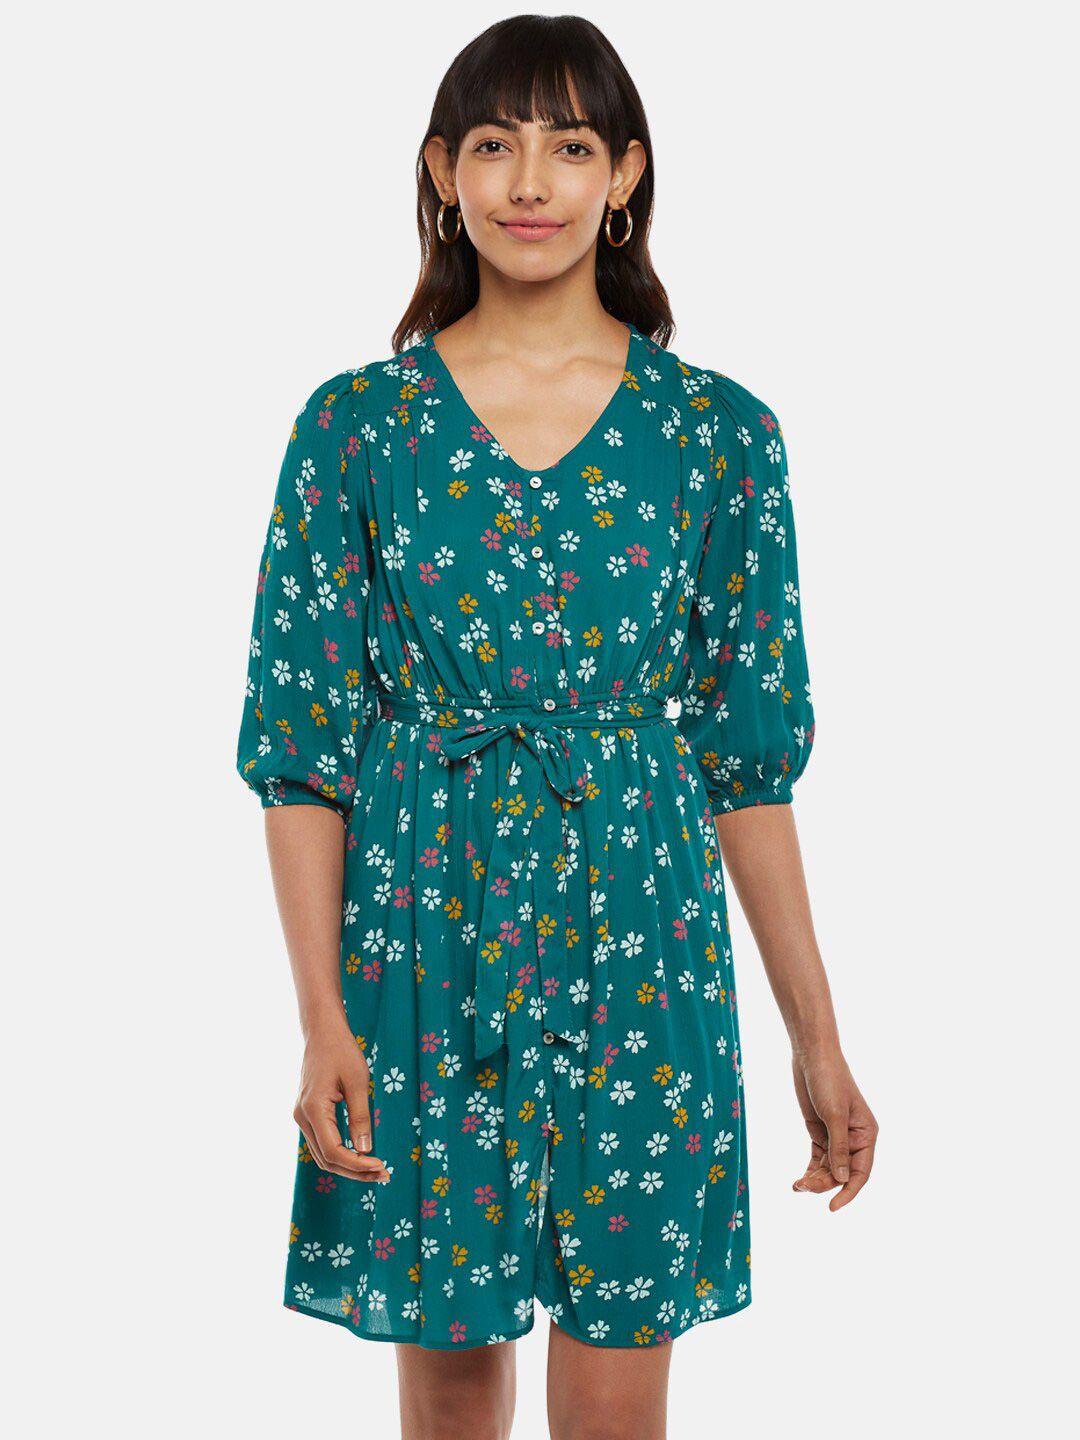 people-women-teal-floral-printed-a-line-dress